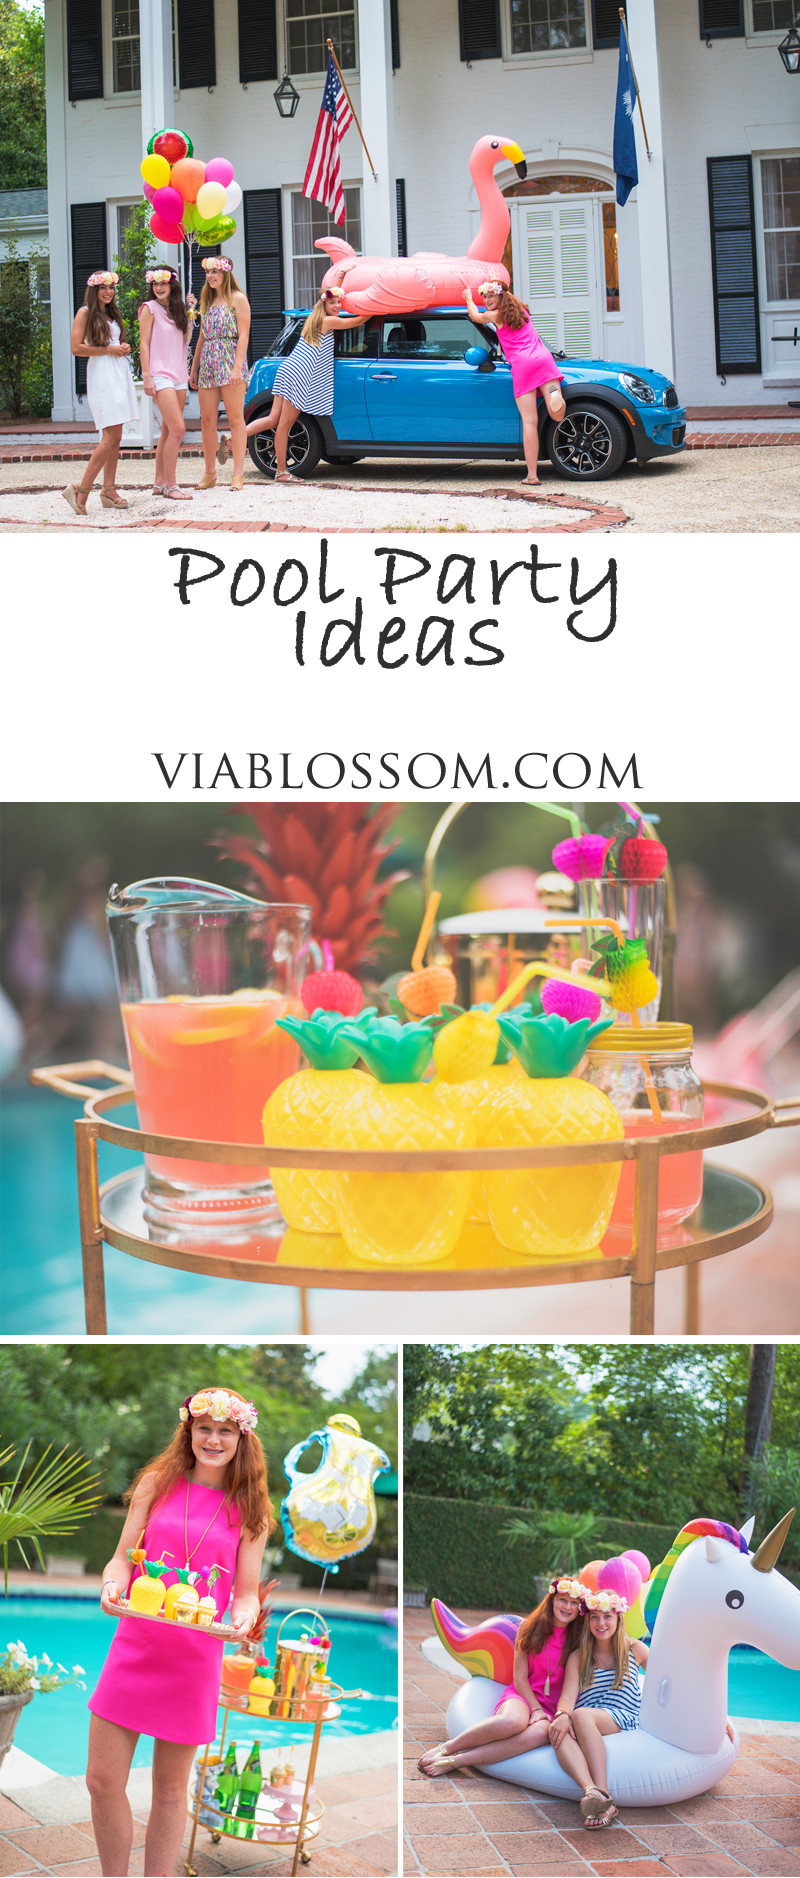 Unicorn Pool Party Ideas
 Pool Party Ideas Via Blossom